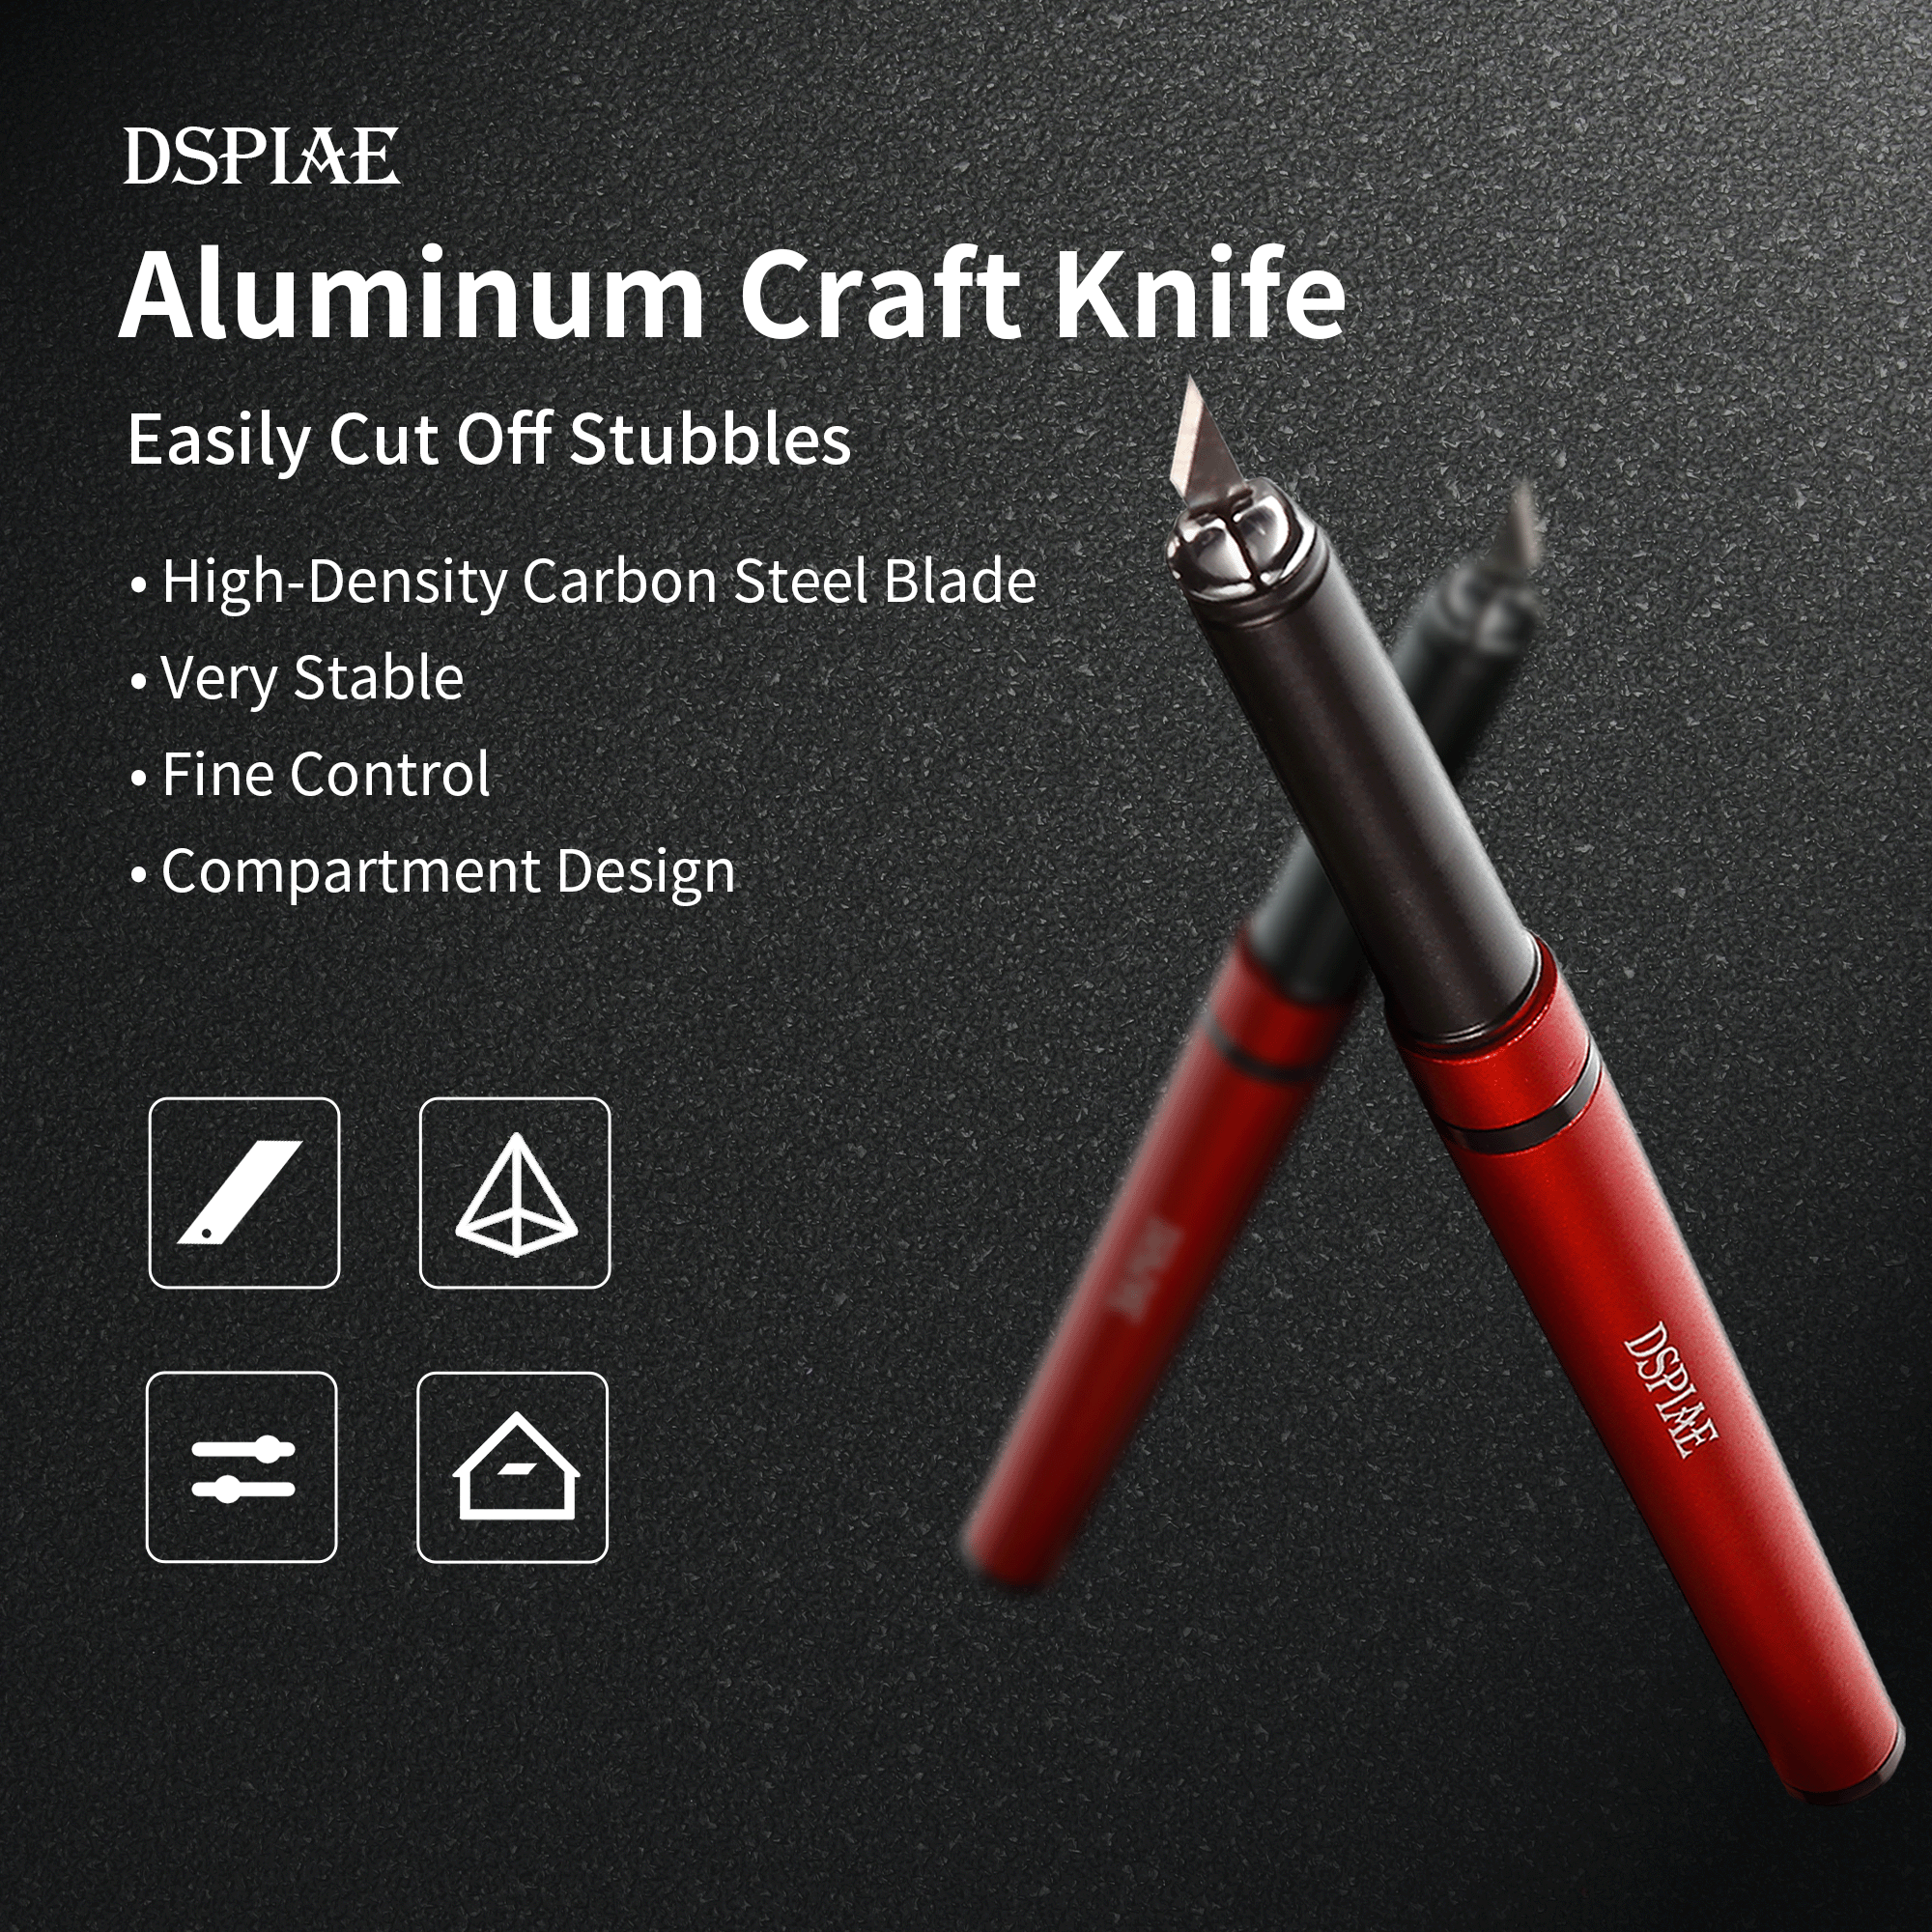 DSPIAE DK-1 - Aluminum Alloy Hobby Knife